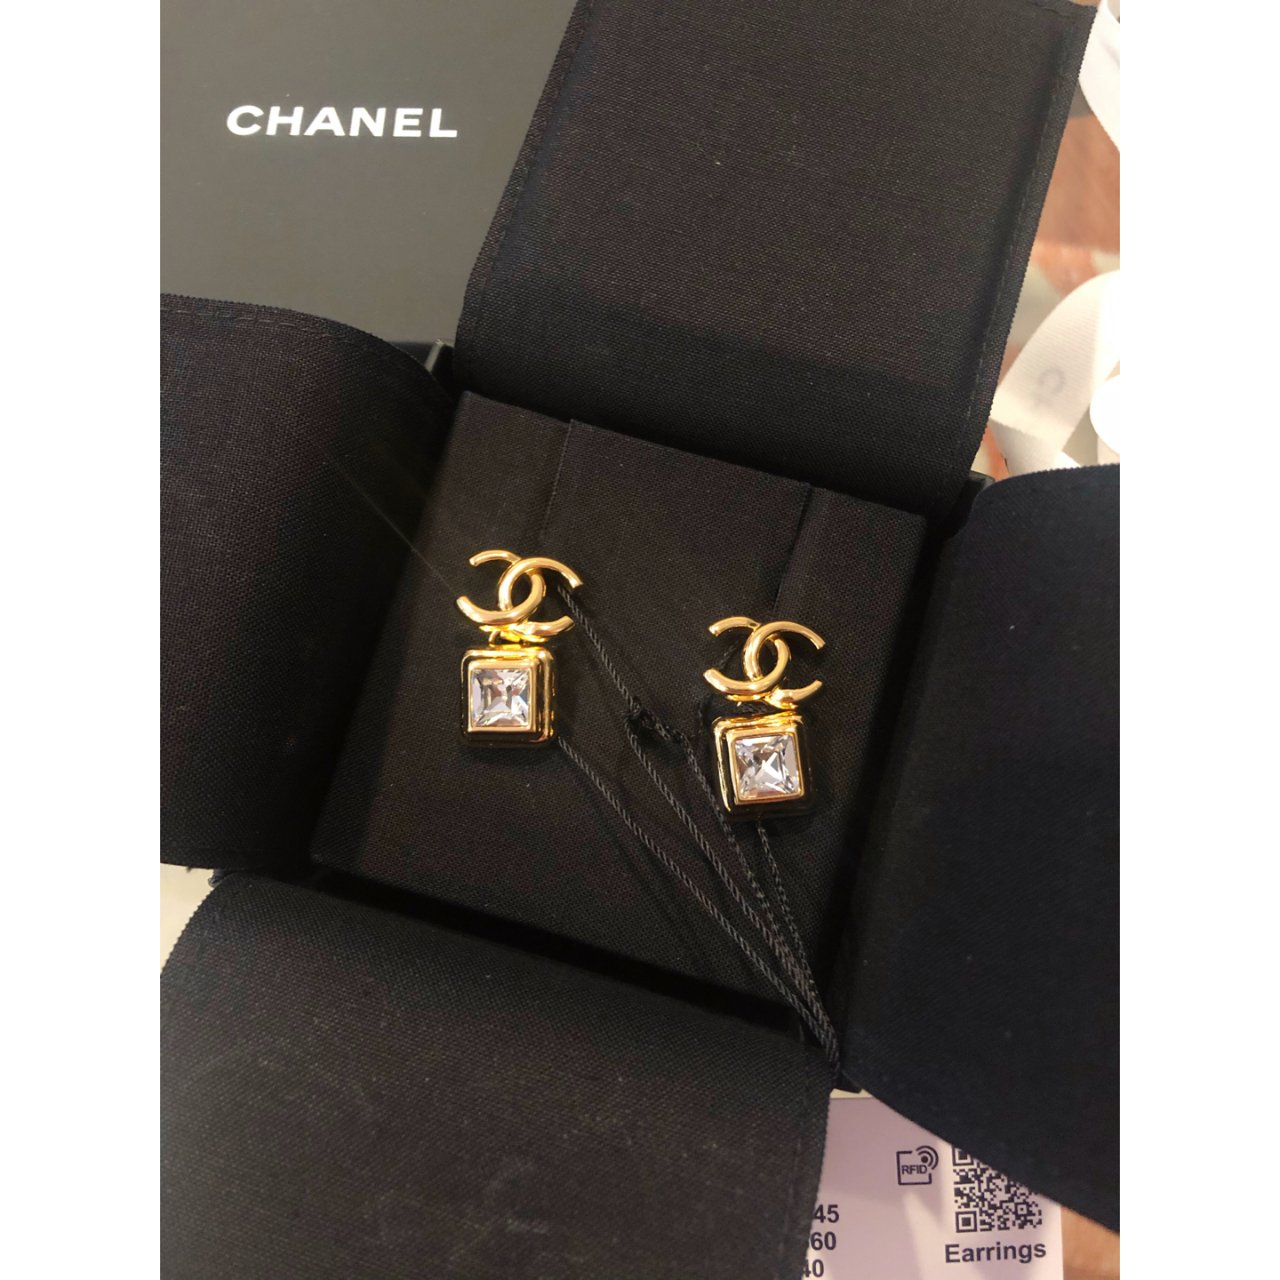 Chanel 香奈儿,450美元